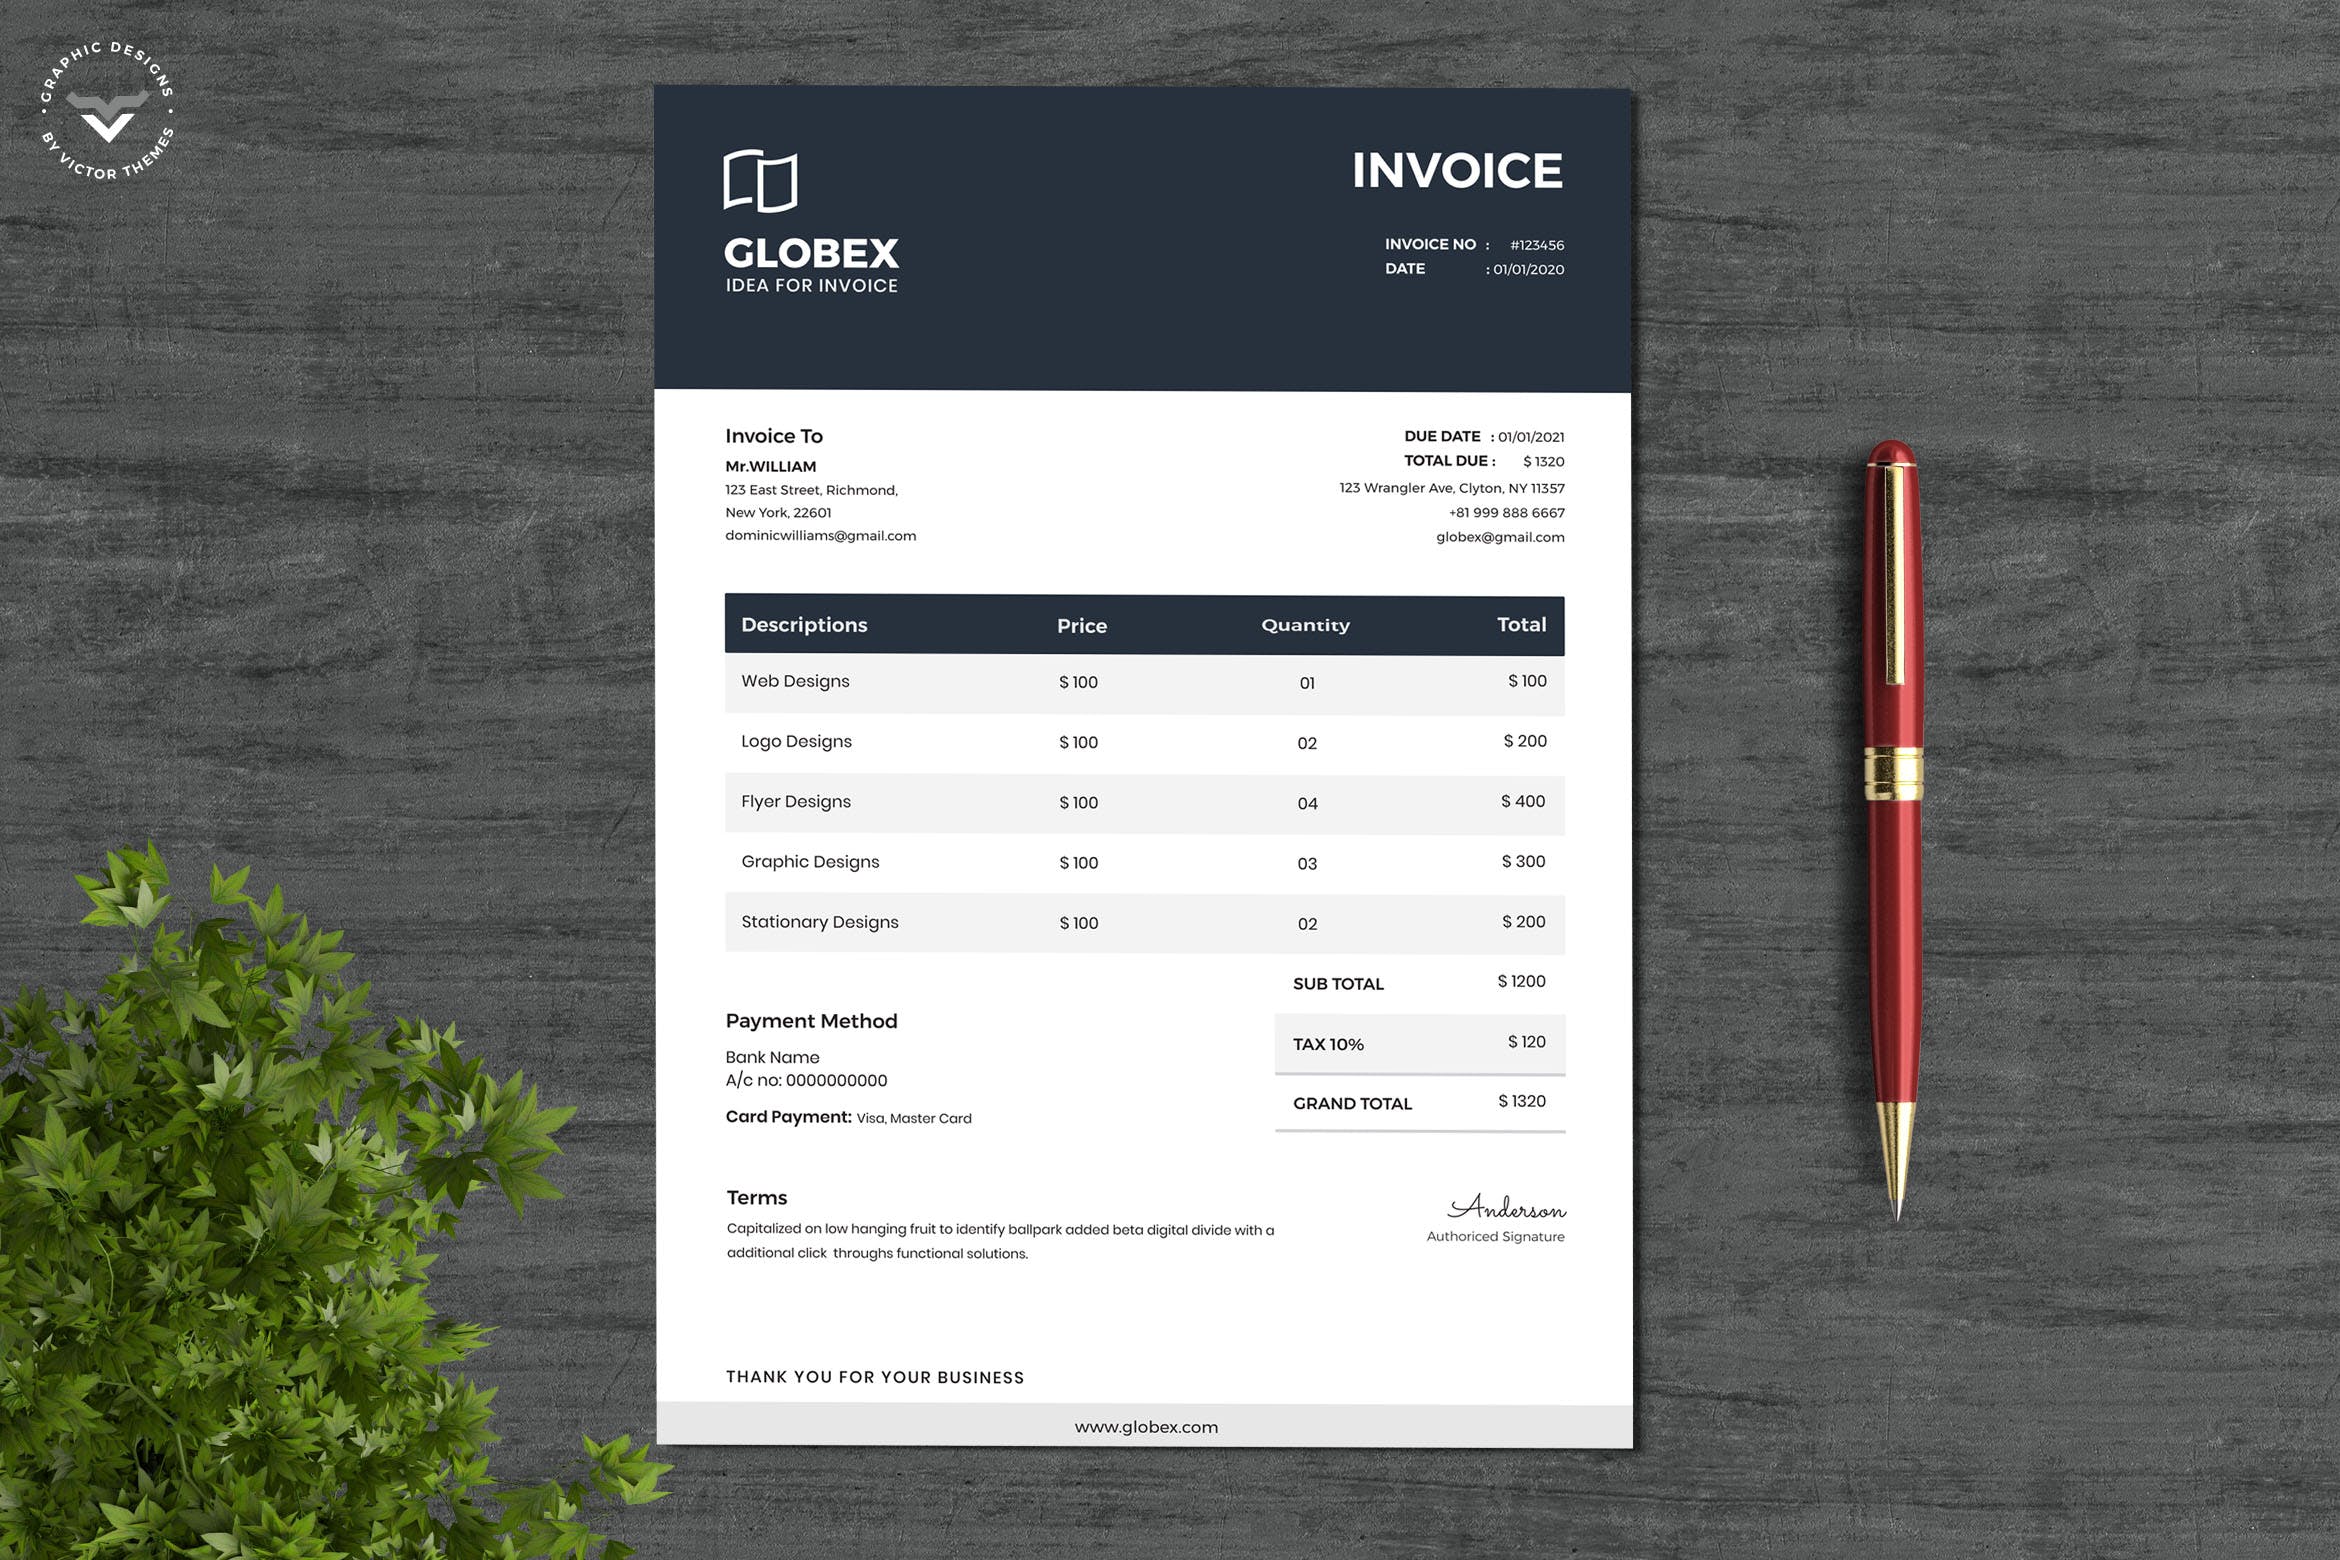 企业服务清单发票票据设计模板 Professional Invoice Template插图